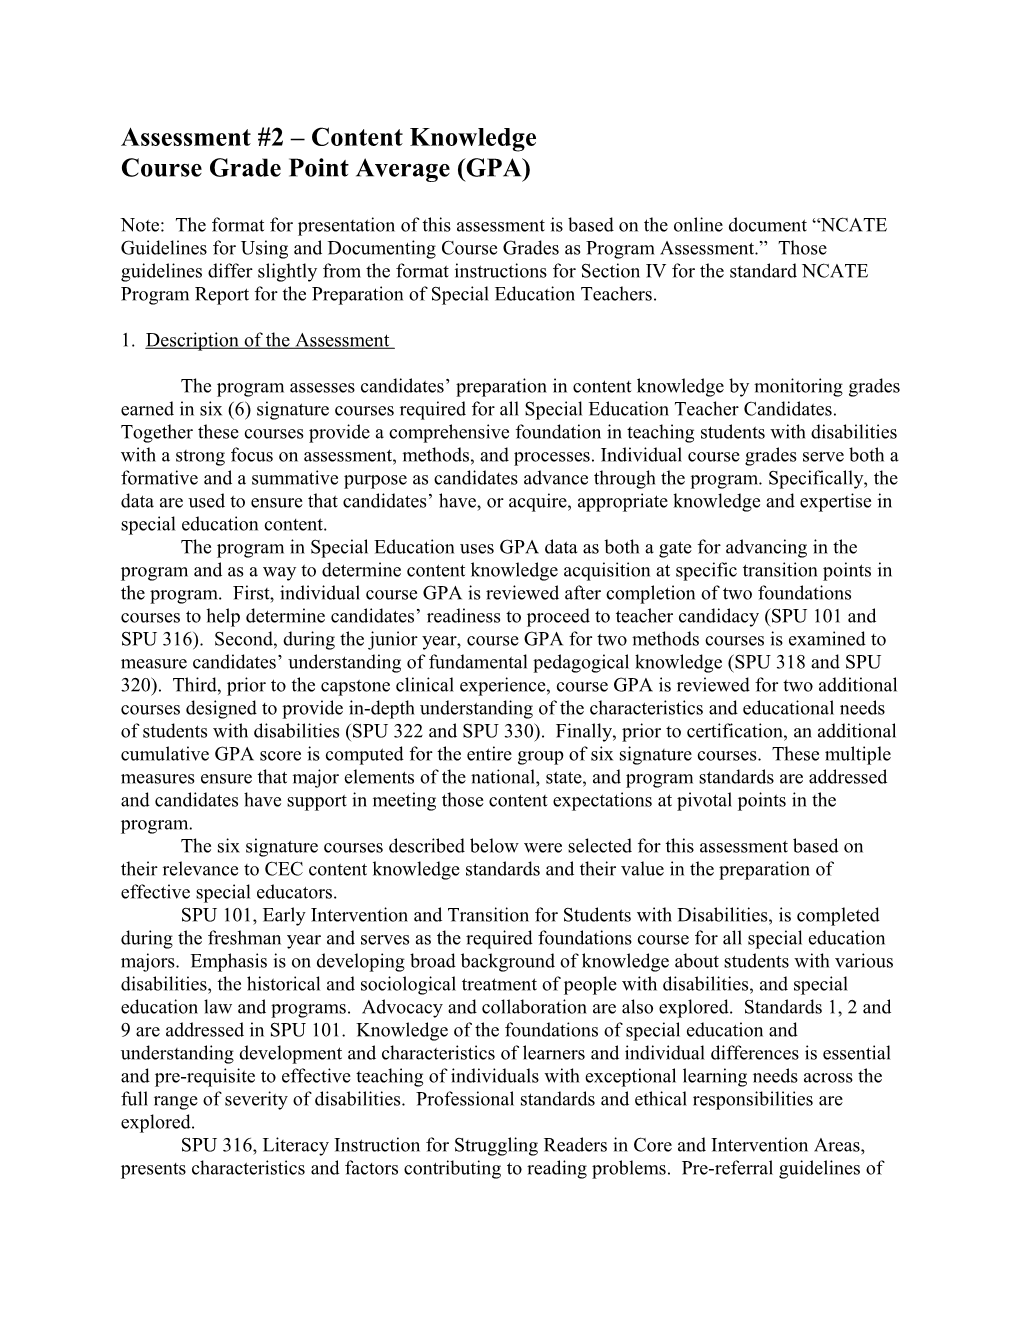 Course Grade Point Average (GPA)